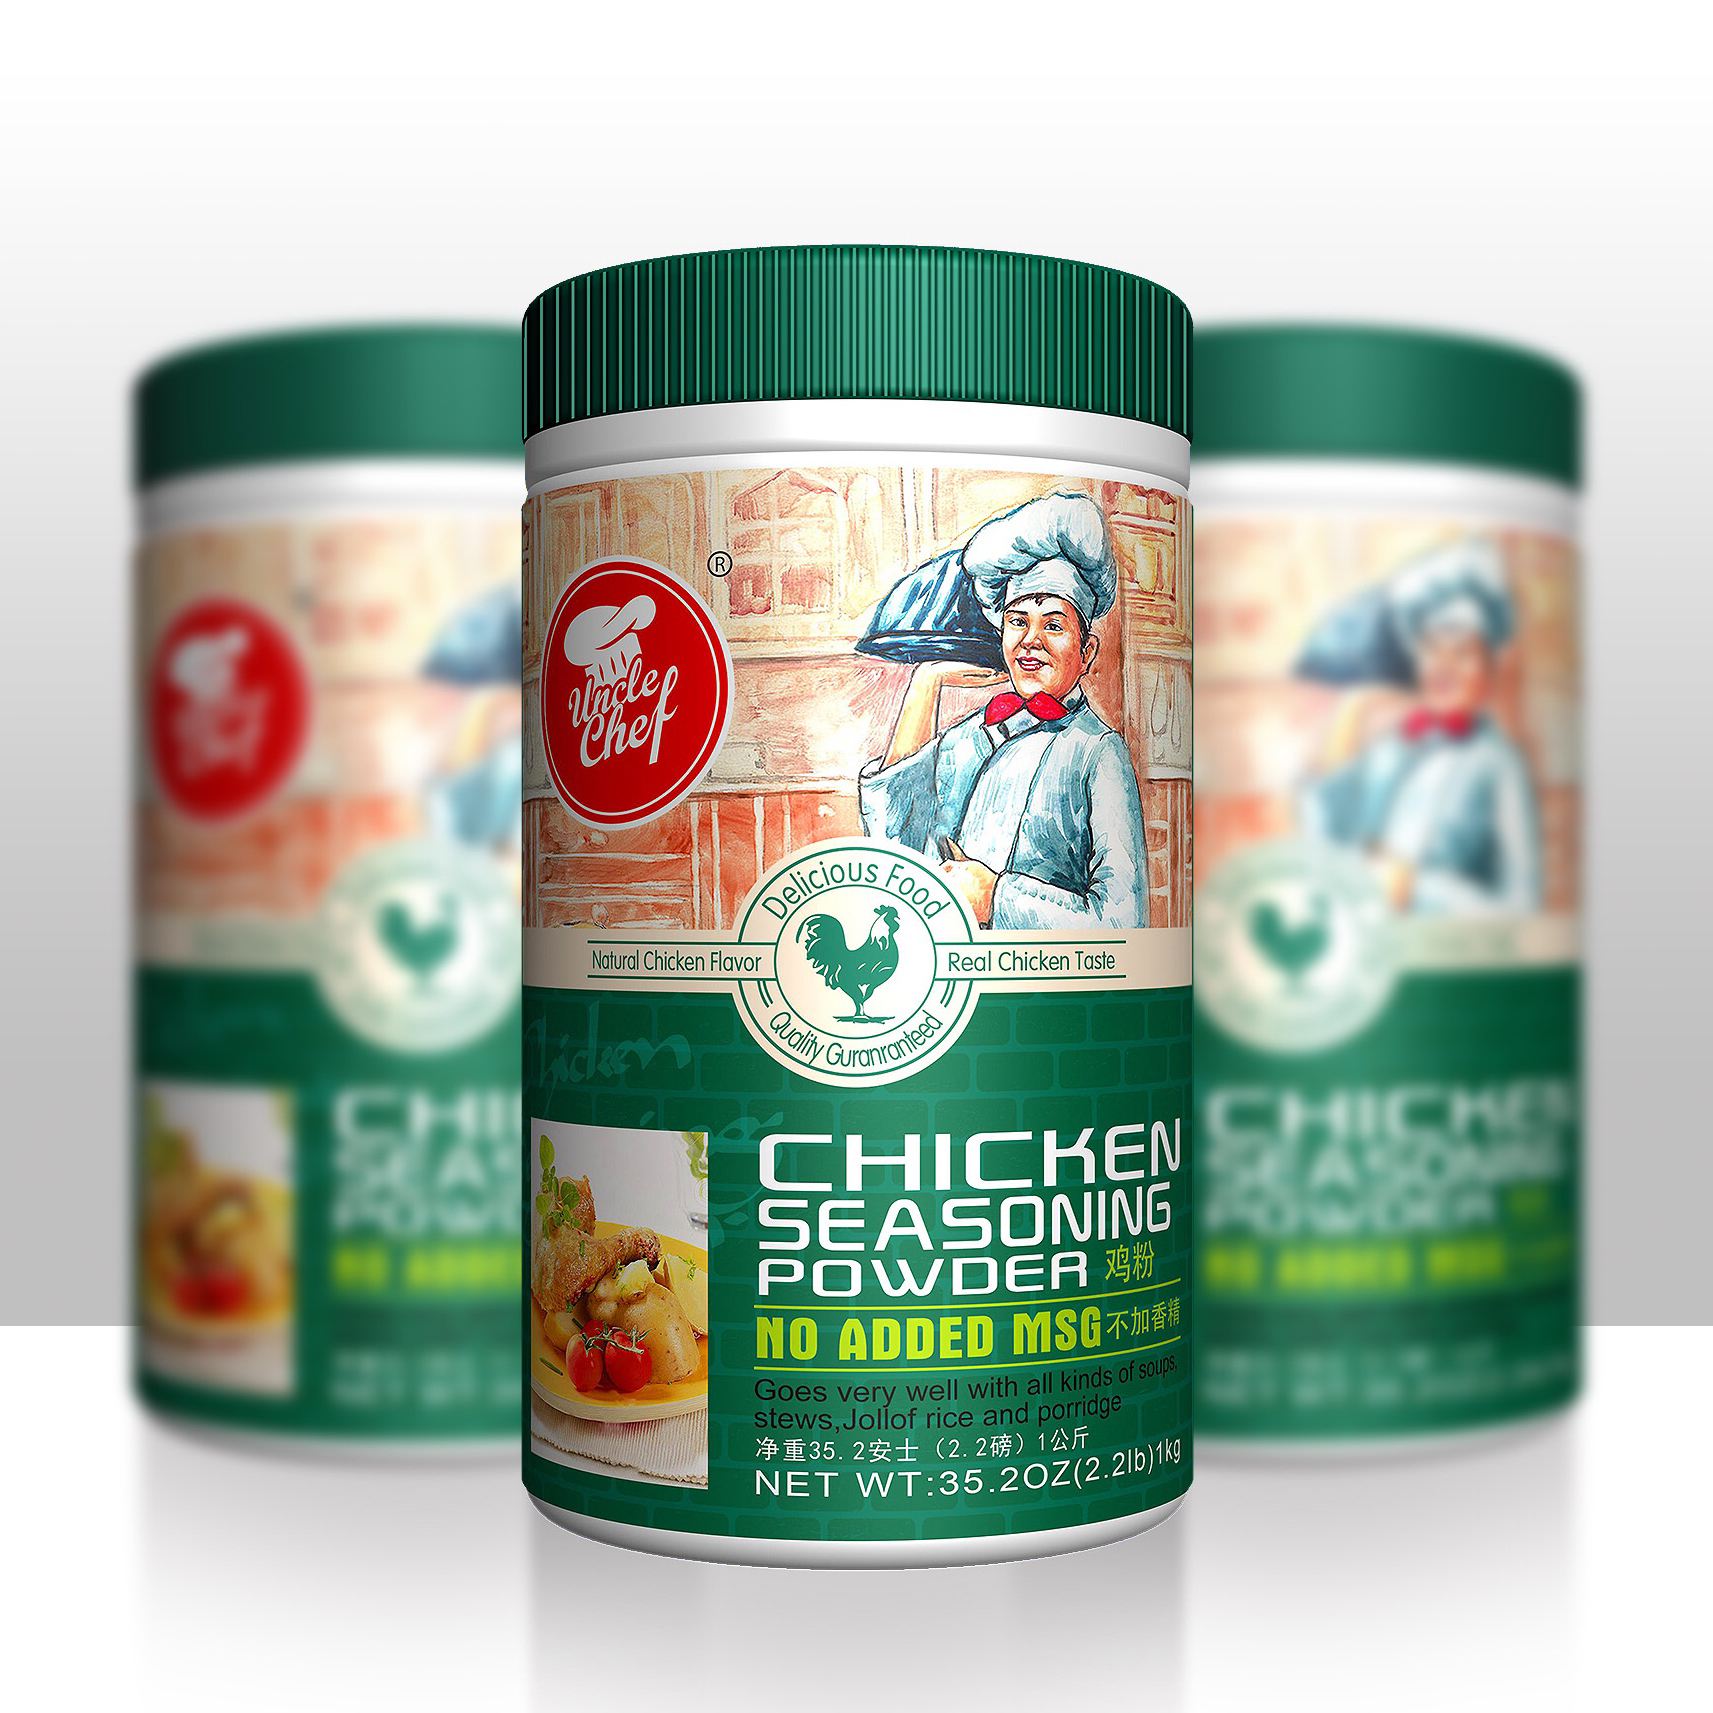 Uncle Chef Chicken flavor stock bouillon Seasoning Powder MSG Free HALAL 1000g X 6tubs